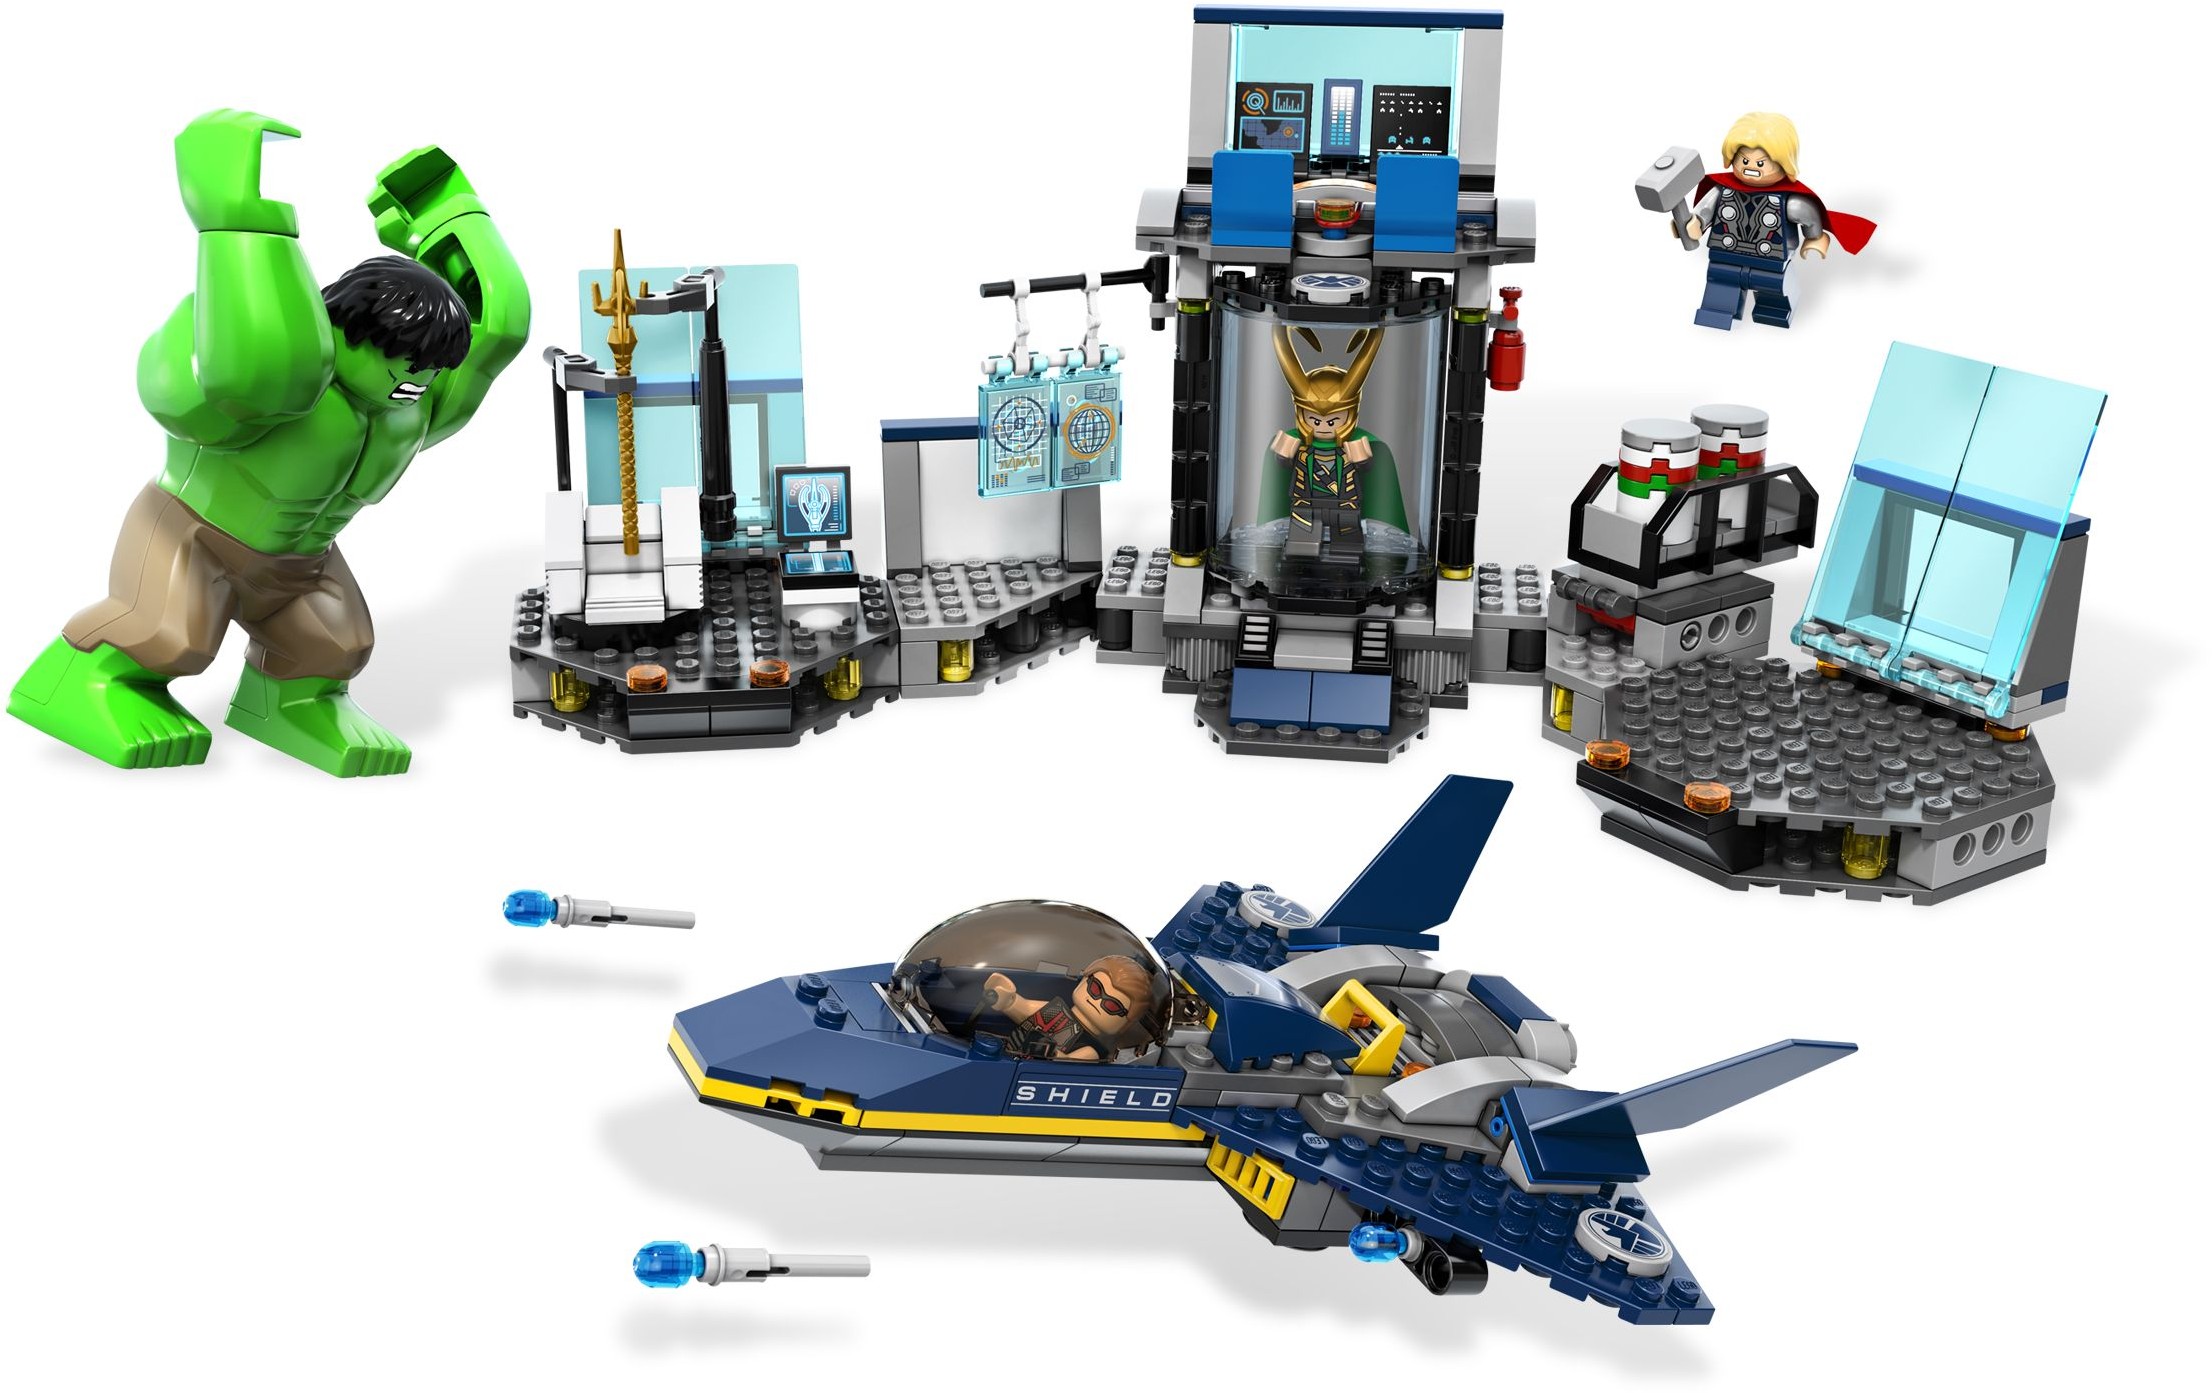 Lego Marvel (Avengers, Super Heroes,) - verschiedene Sets zum aussuchen  - Neu